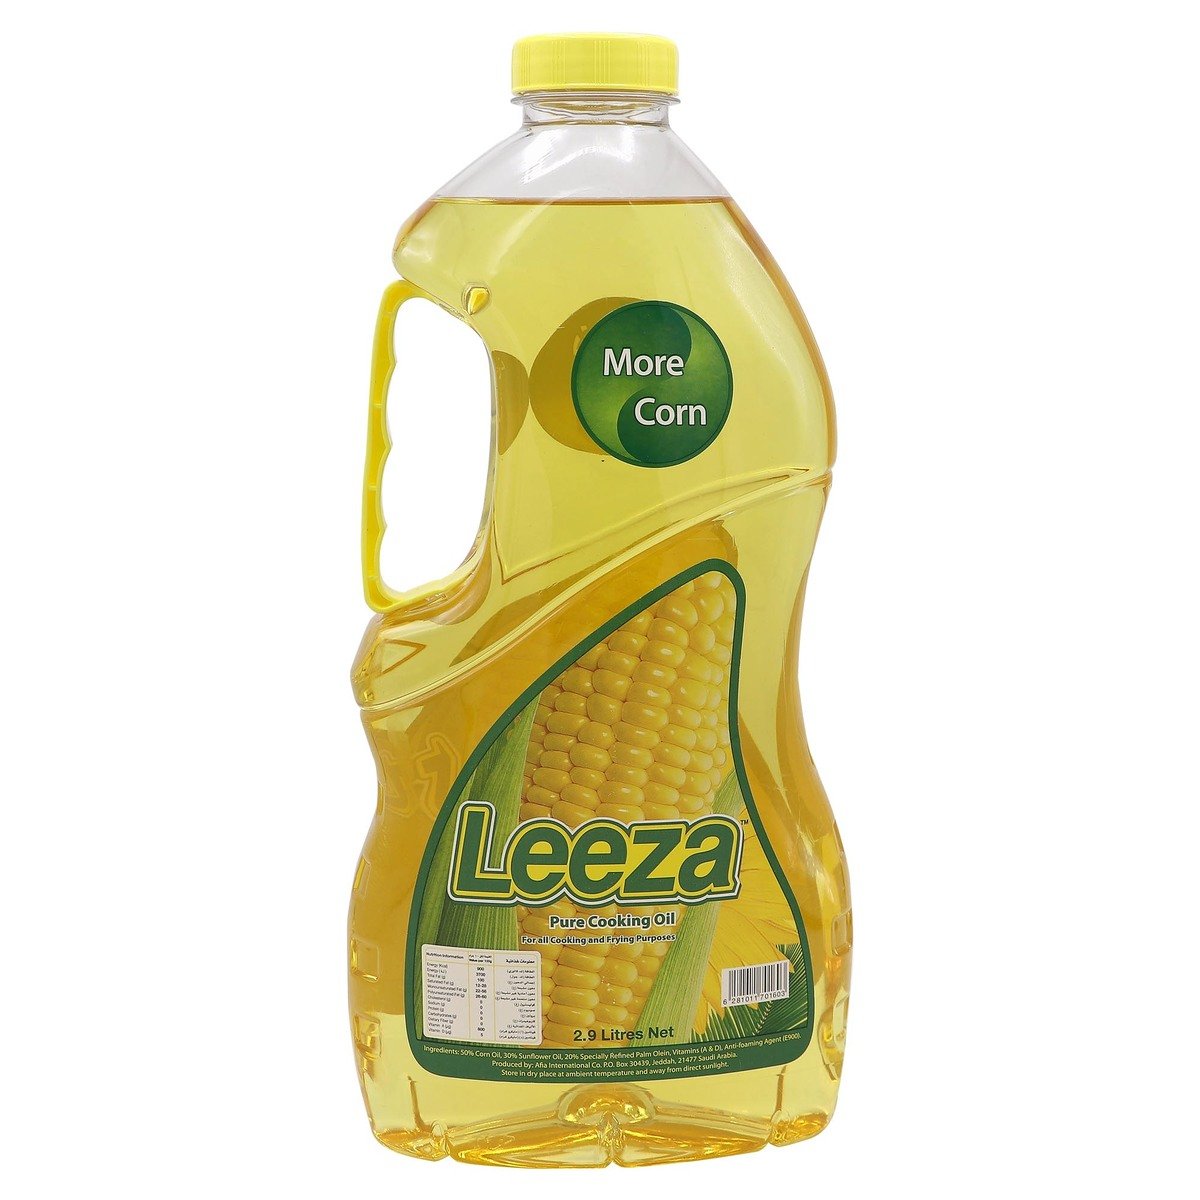 Leeza Pure Cooking Oil 2.9Litre